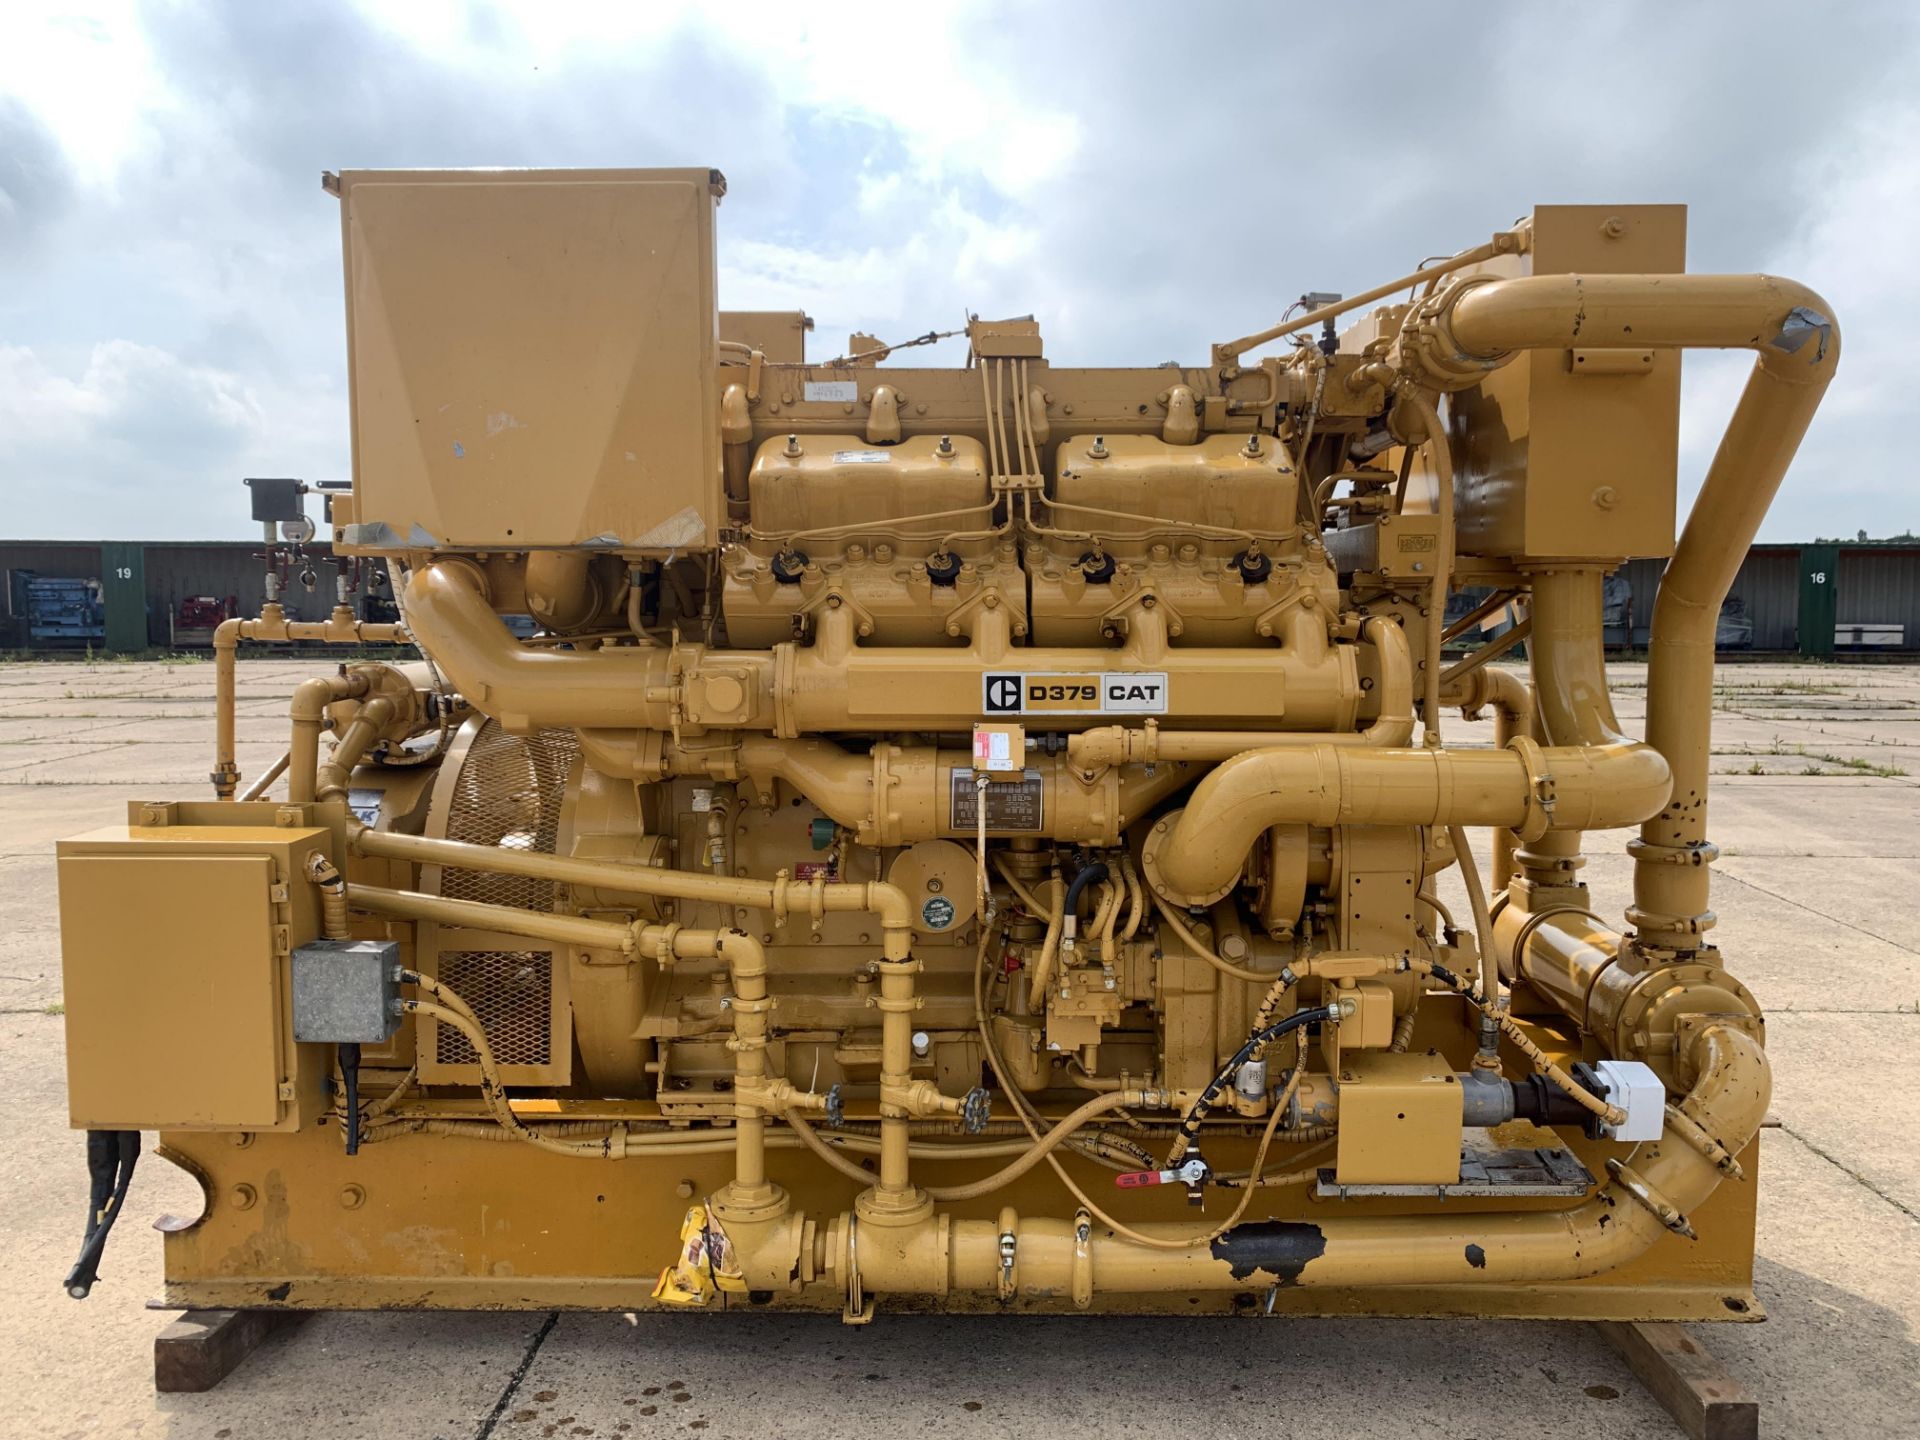 Caterpillar V12 D379 Marine Diesel Engine: - Image 2 of 8